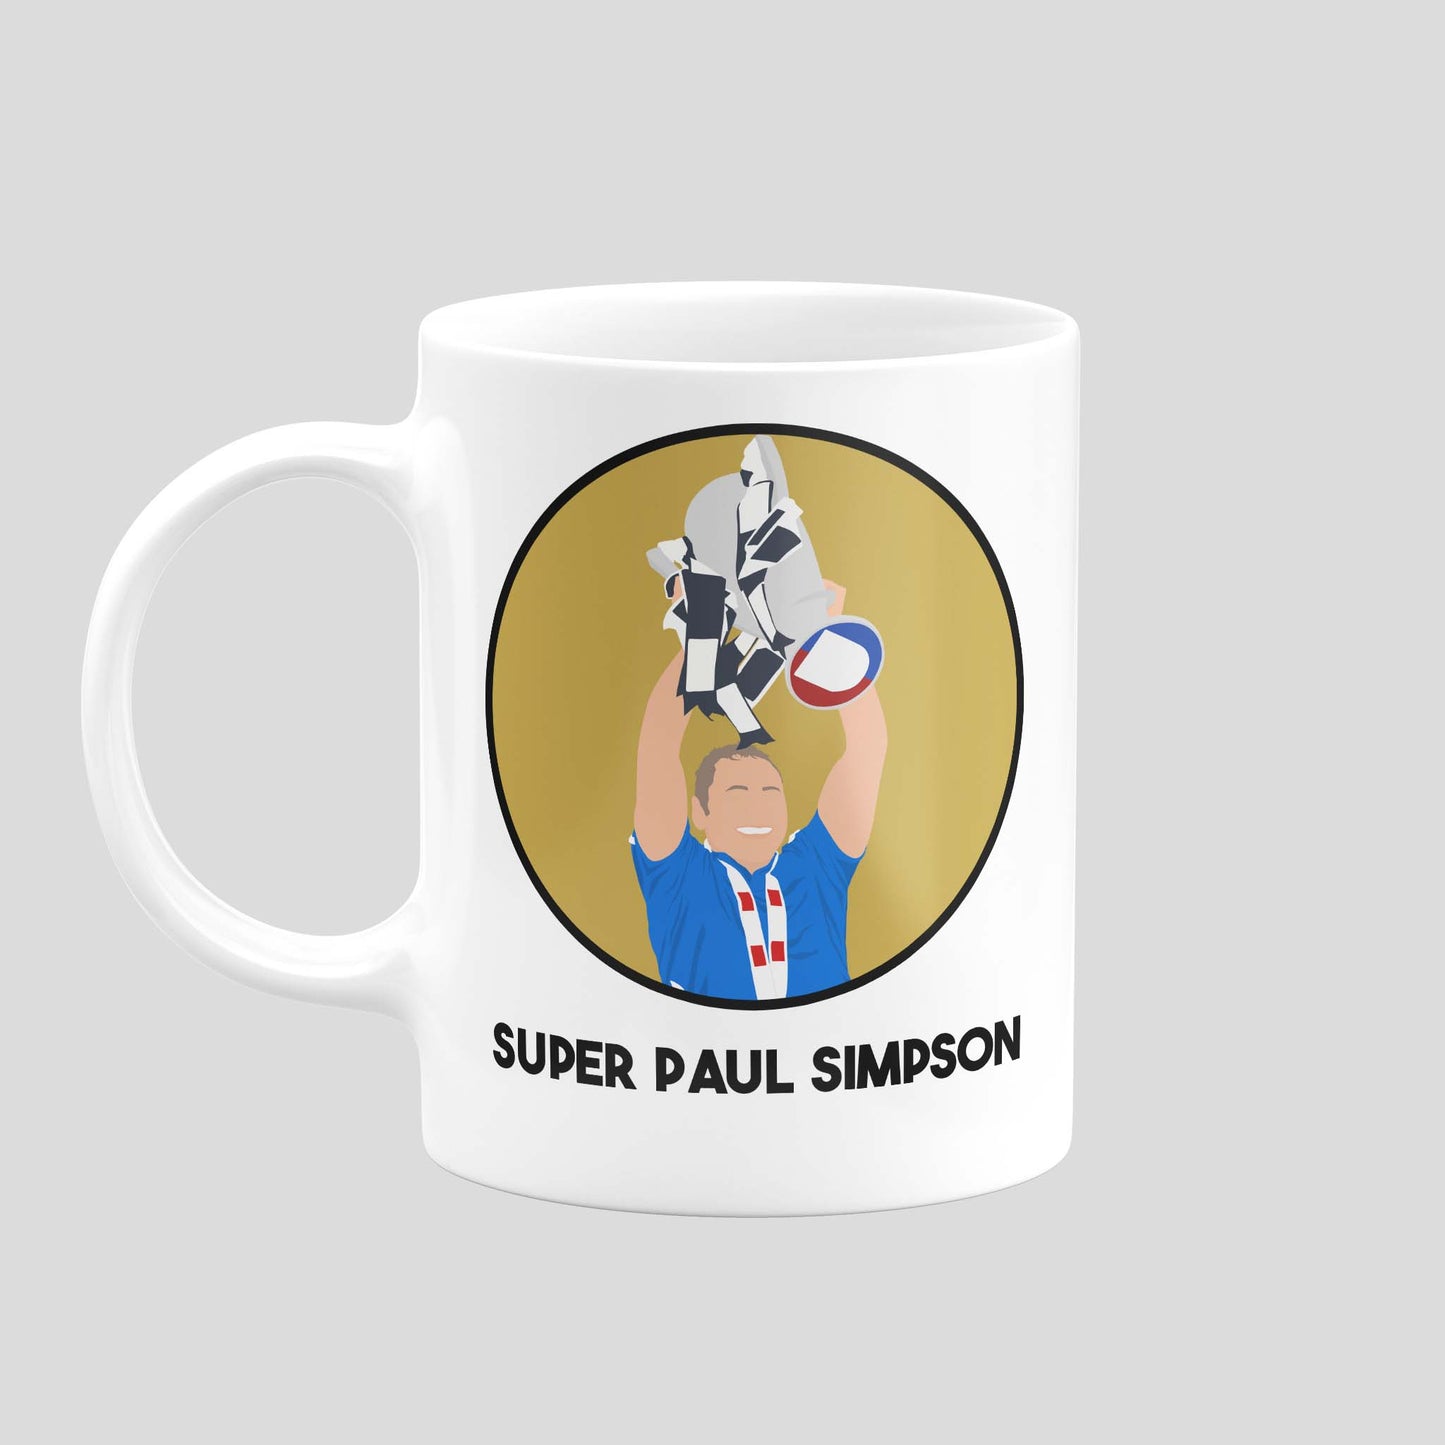 Paul Simpson Final Mug